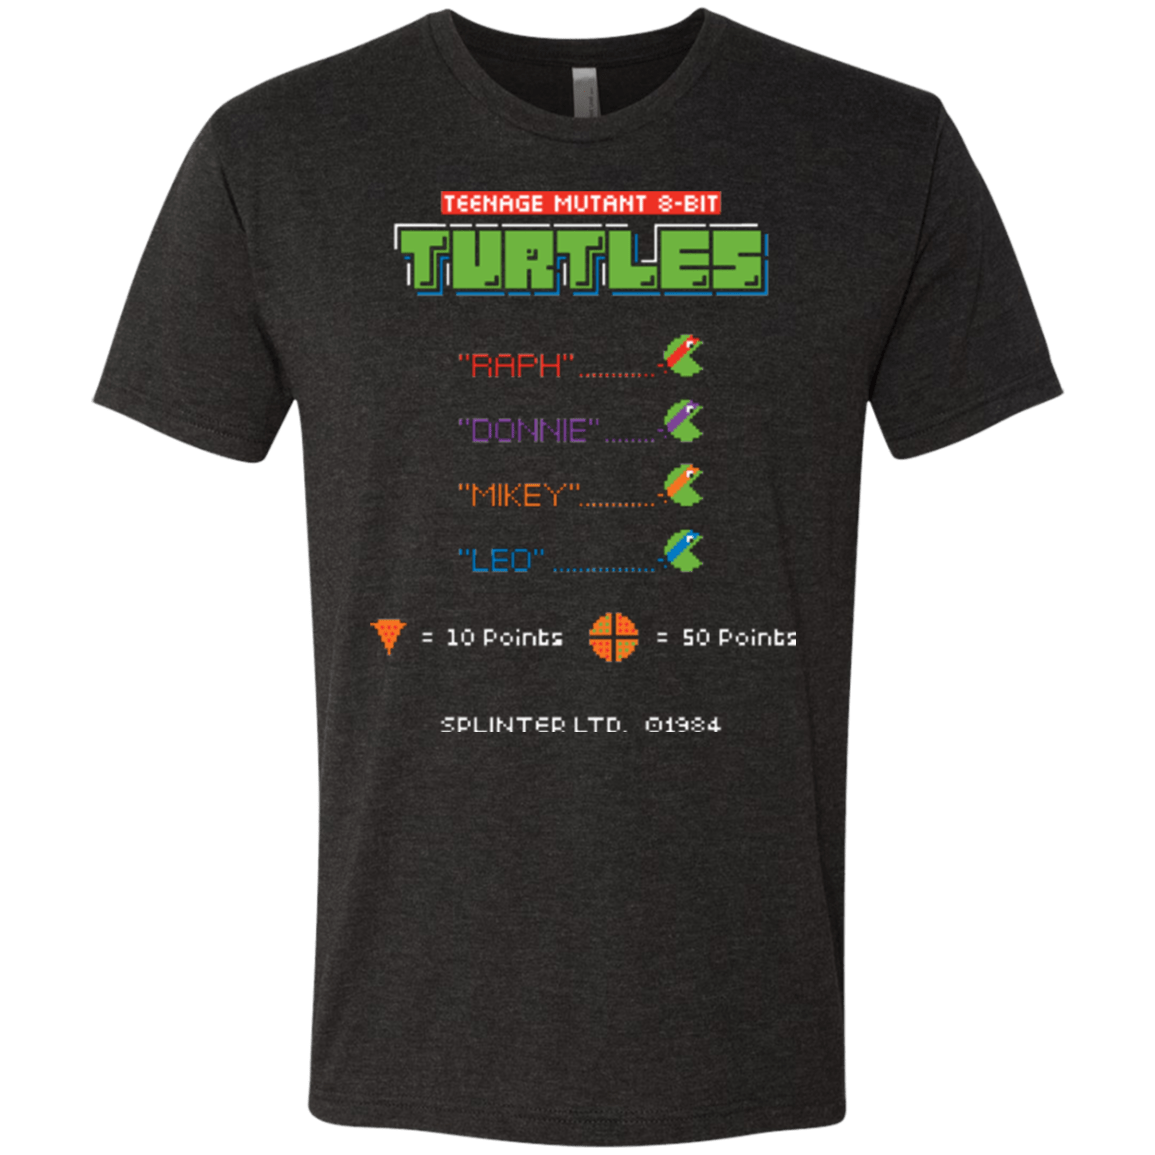 T-Shirts Vintage Black / Small 8 Bit Turtles Men's Triblend T-Shirt